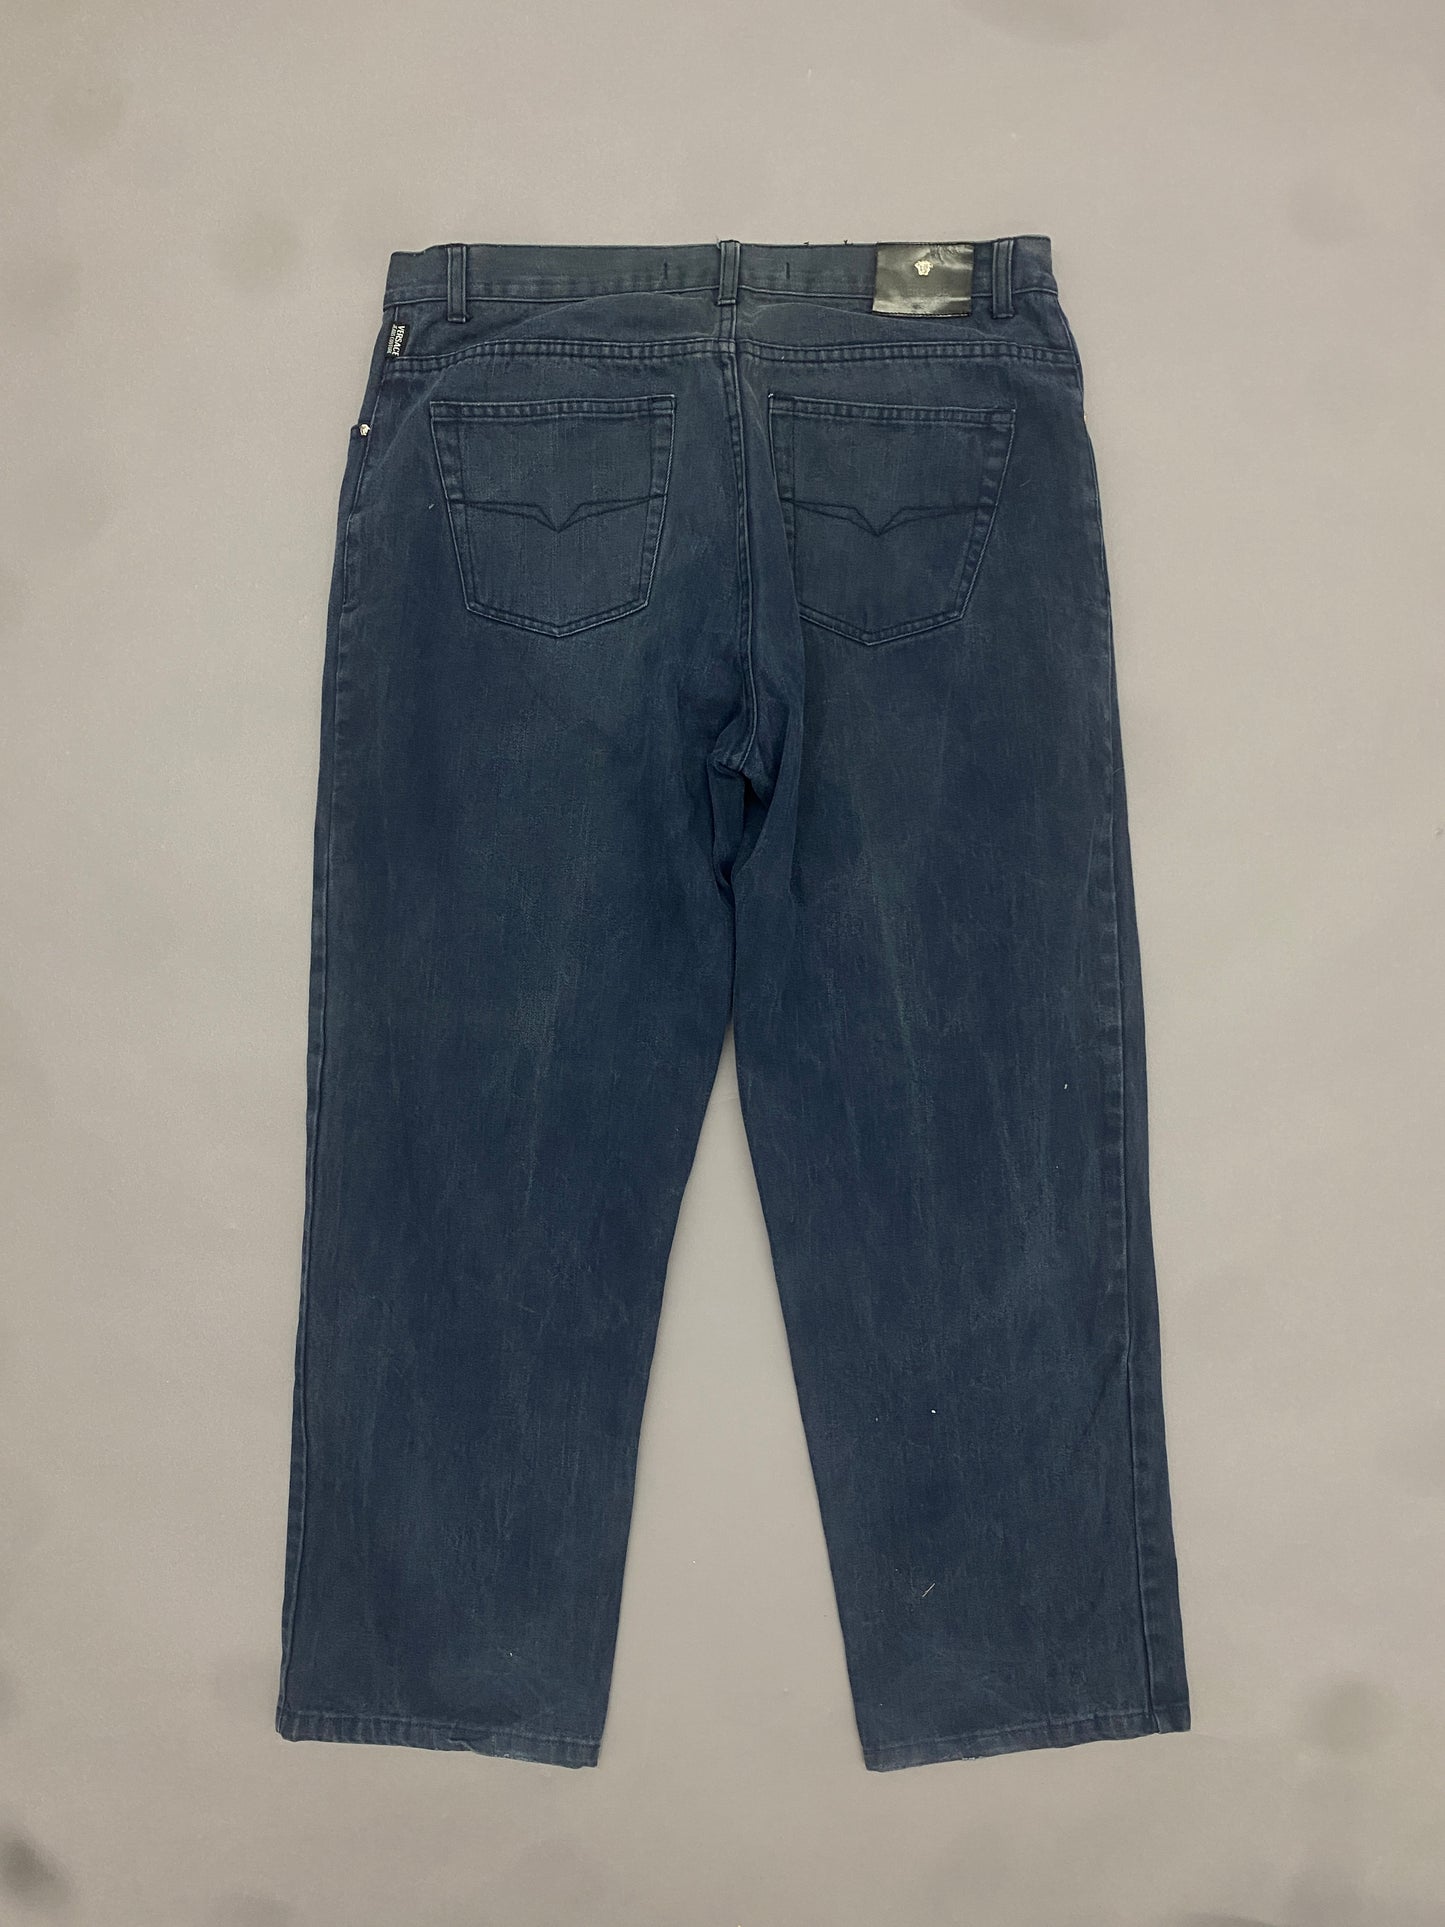 Jeans Versace Navy Vintage - 36